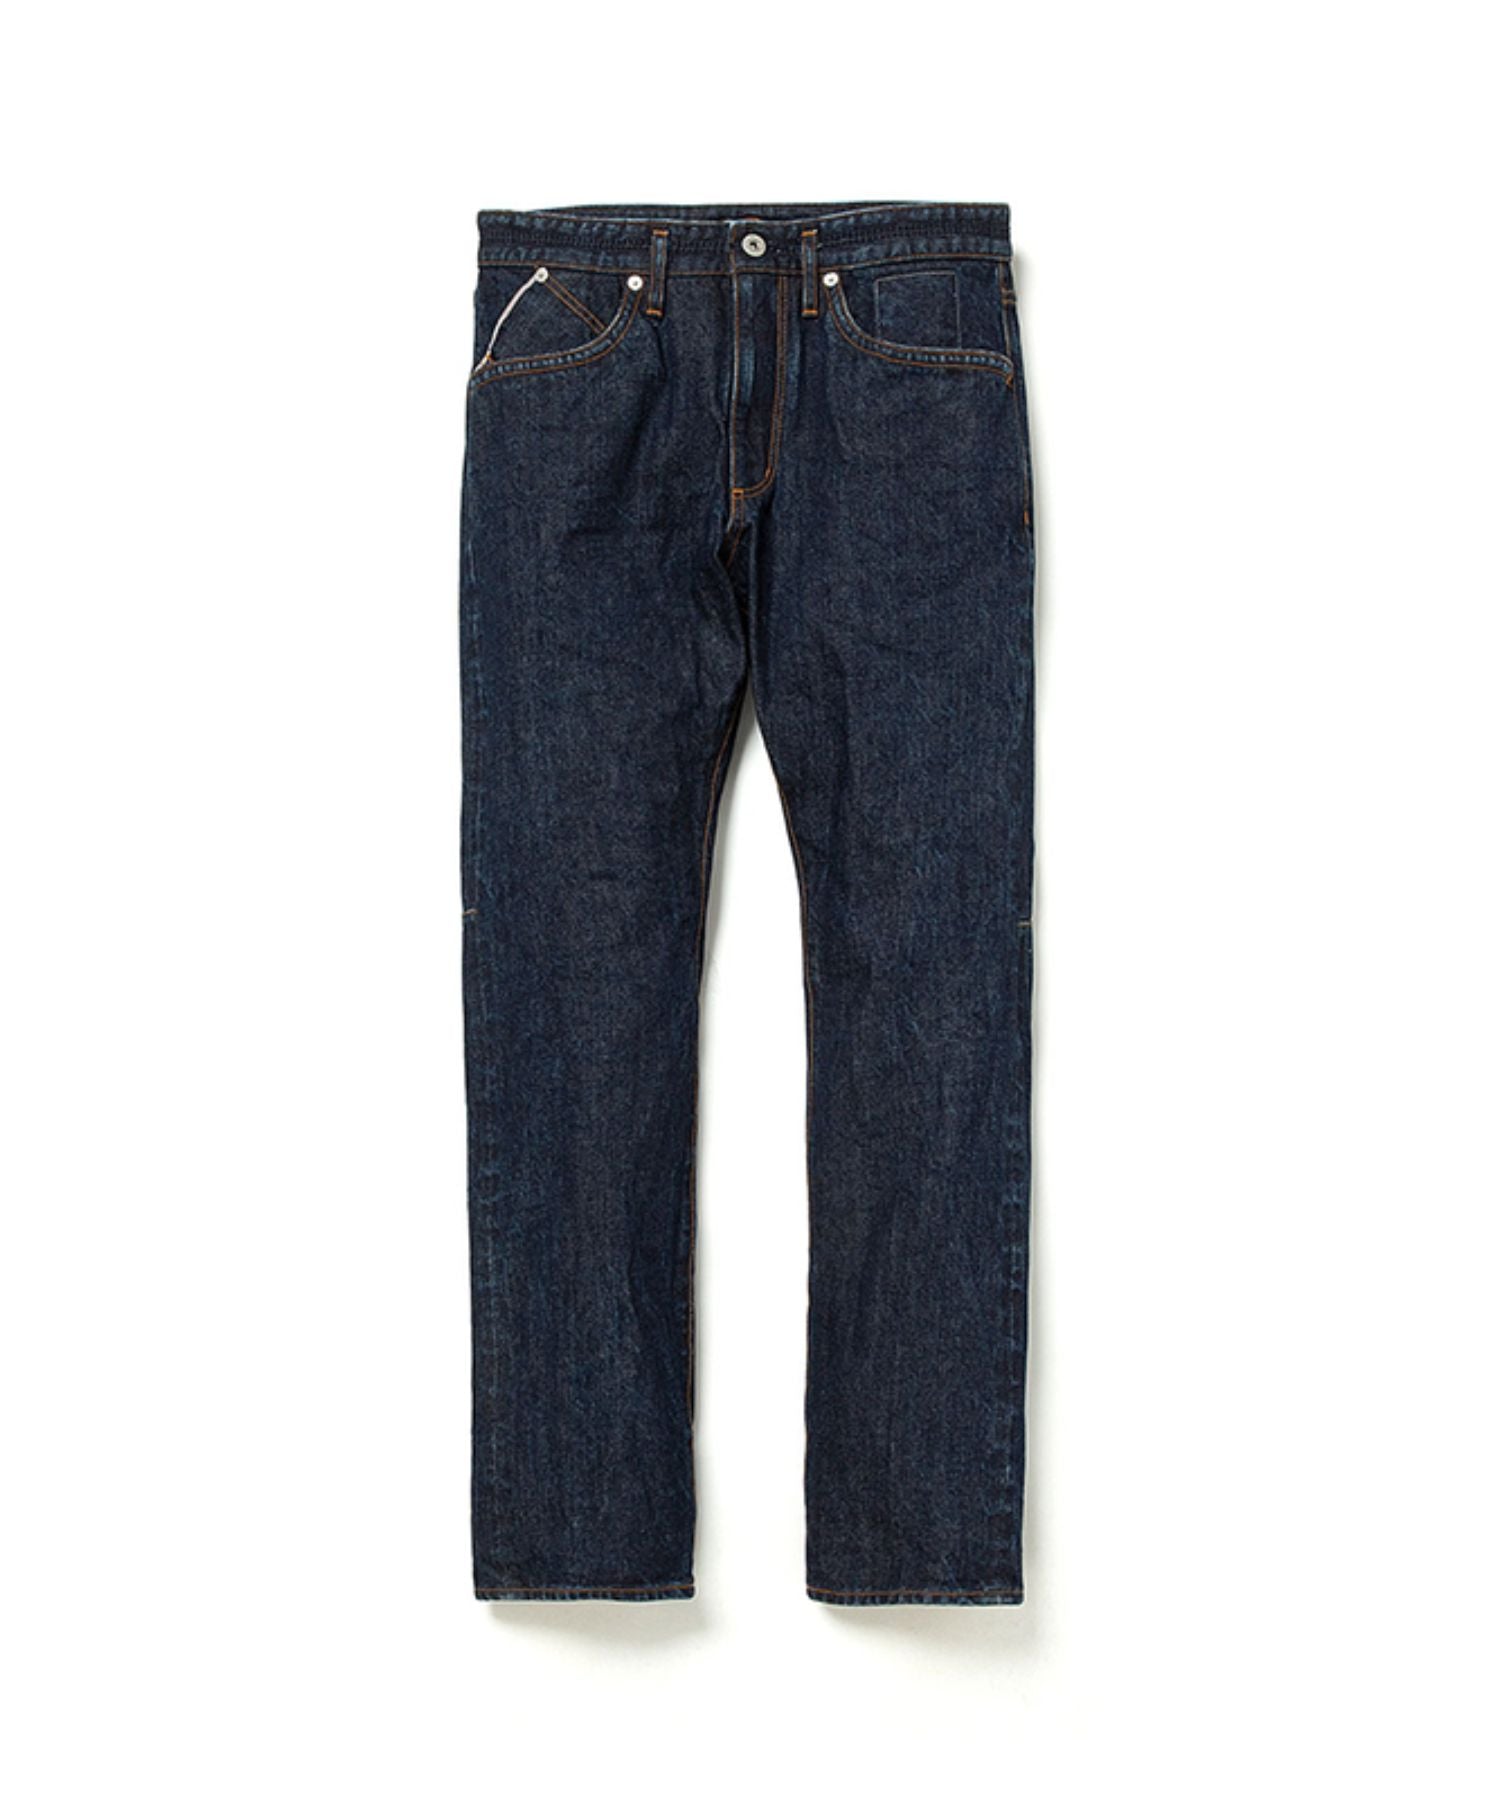 Dweller 5P Jeans 01 Cotton 13.5oz Selvedge Denim RW - nonnative